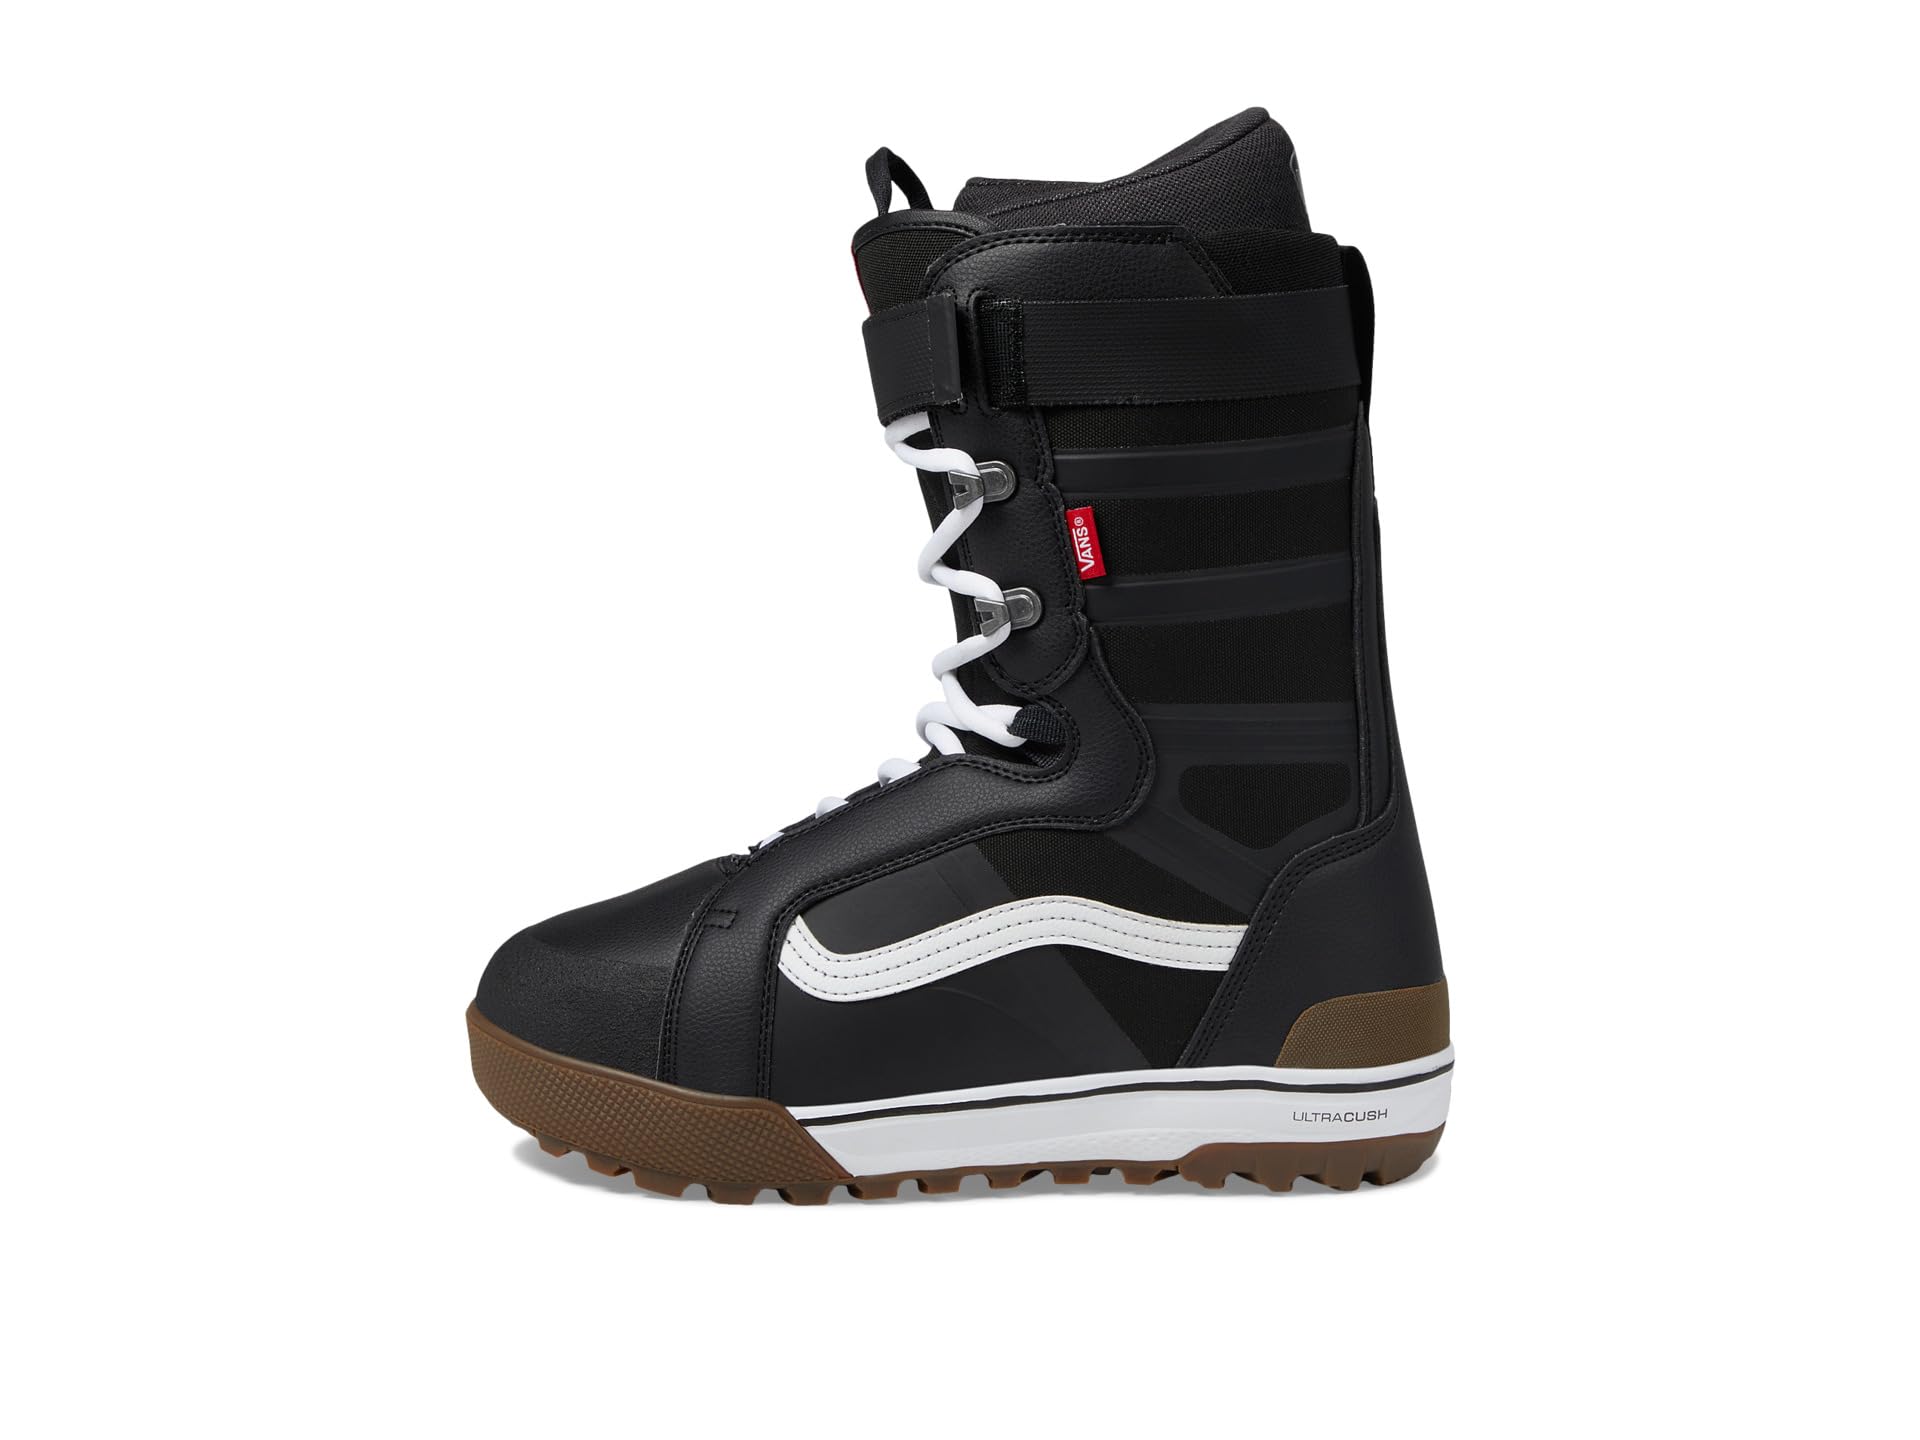 Ботинки Vans Hi Standard Pro Snowboard Boots ботинки vans hi standard pro цвет jill perkins black burgundy